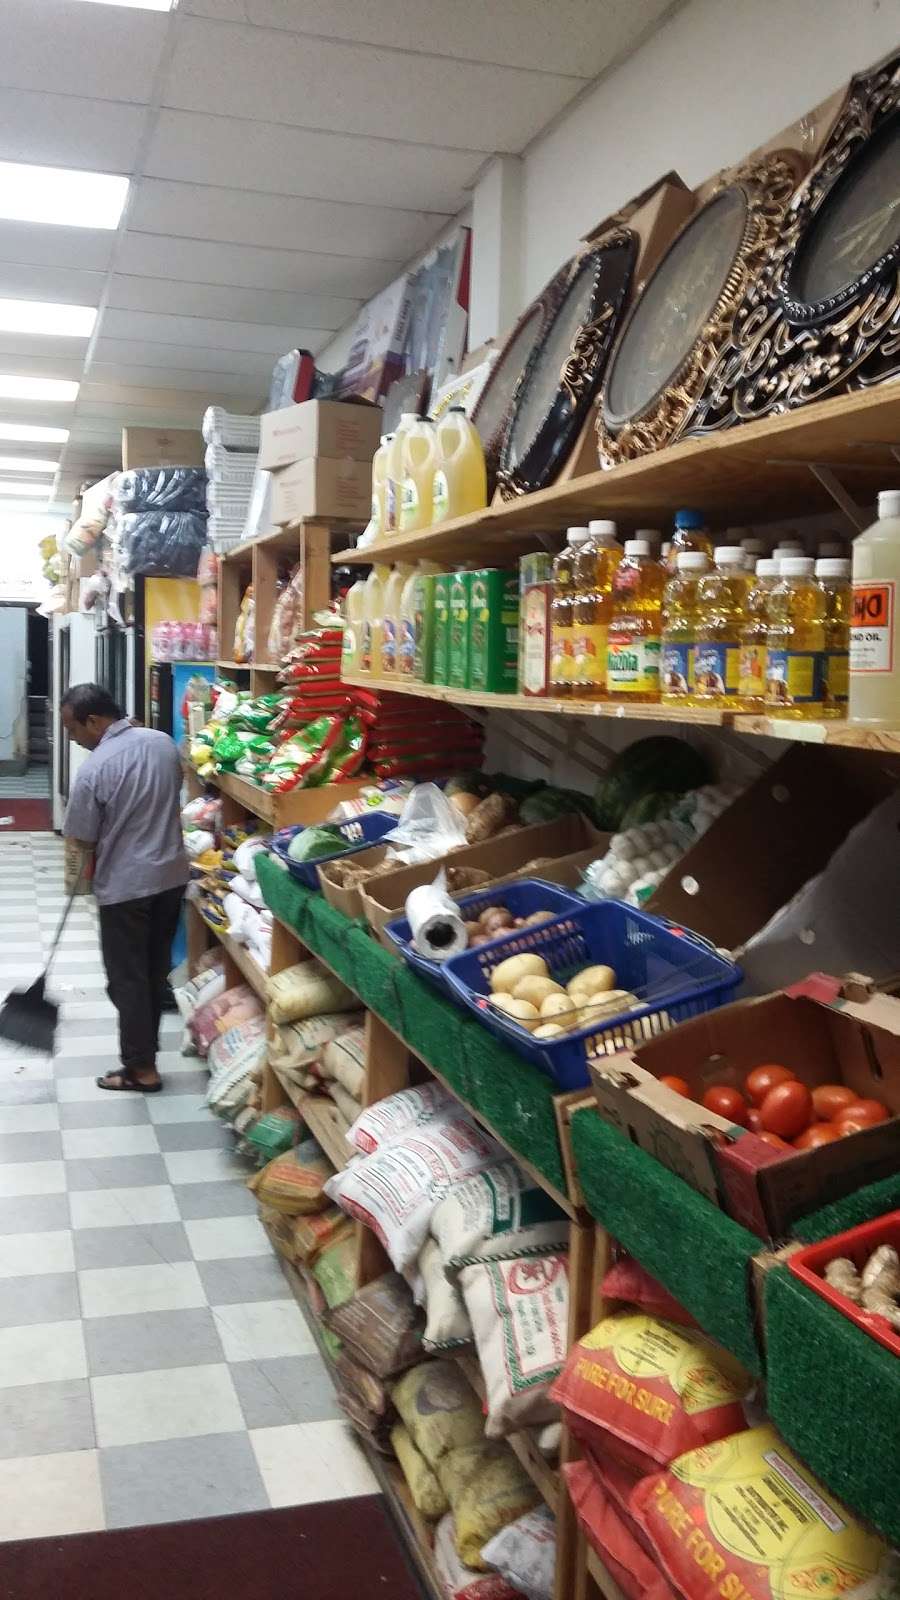 Taj mahal halal meat & grocery | 6770 Market St, Upper Darby, PA 19082 | Phone: (610) 352-2200